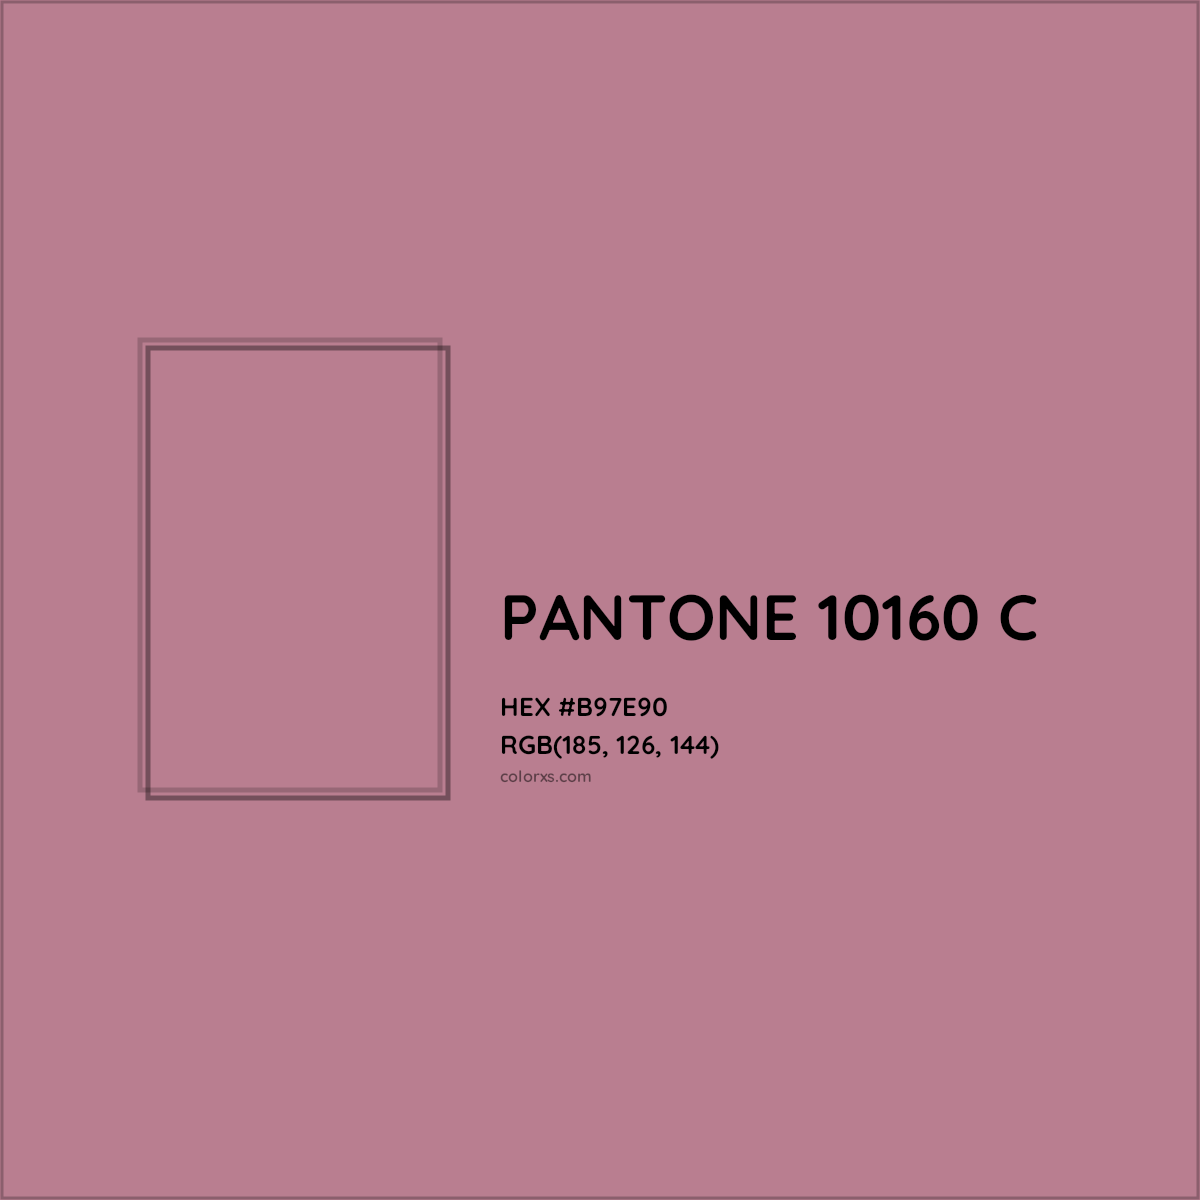 HEX #B97E90 PANTONE 10160 C CMS Pantone PMS - Color Code